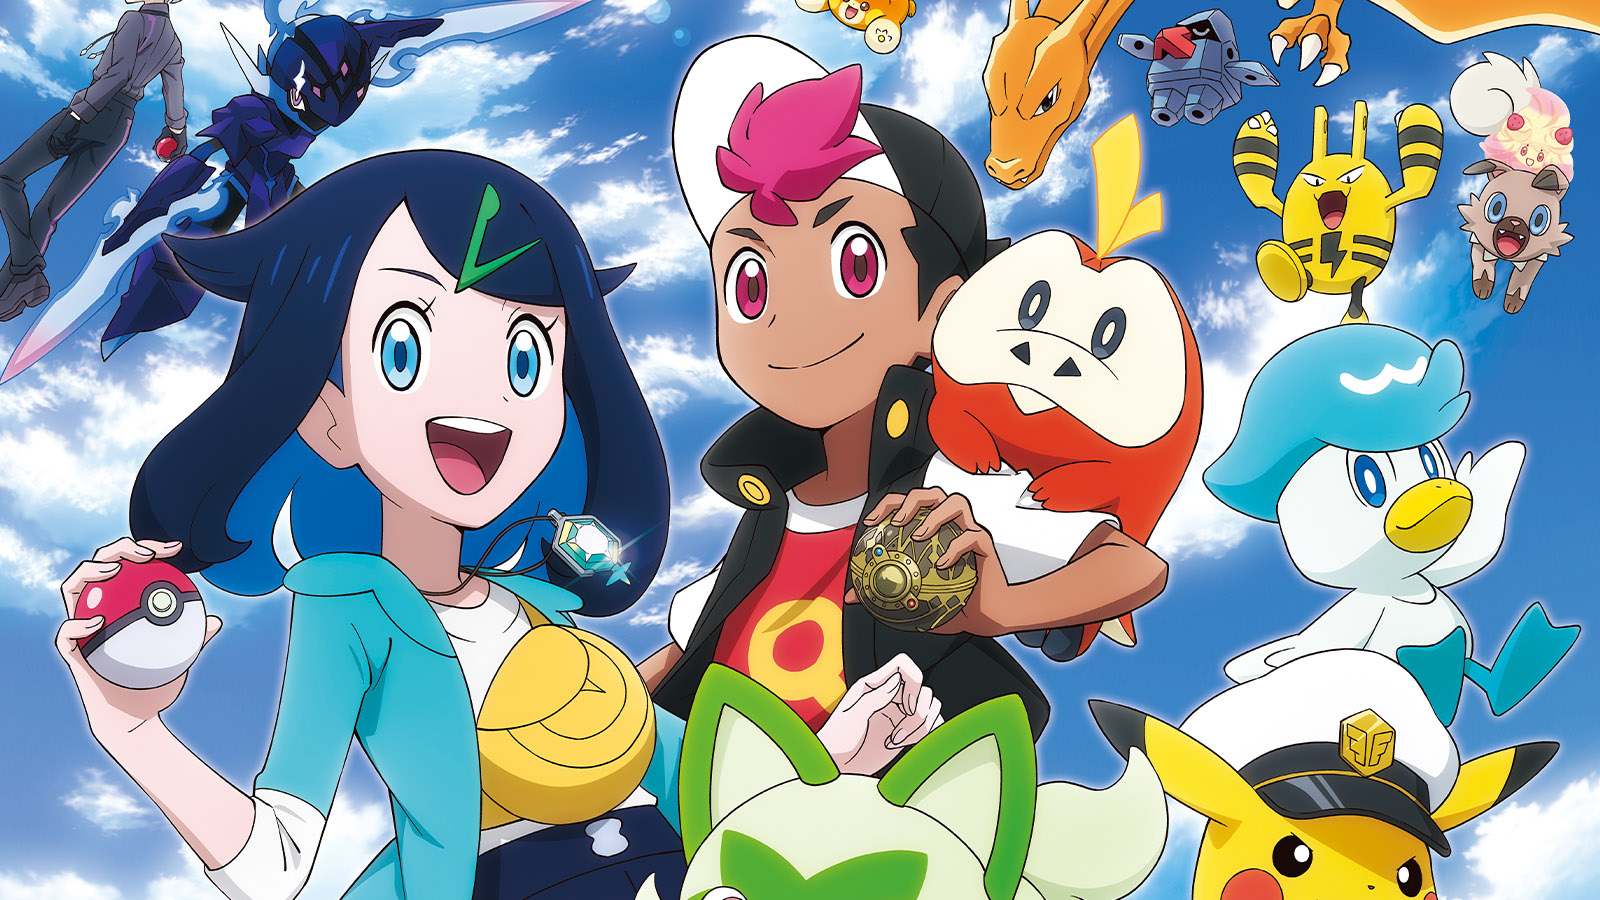 Pokémon Horizons: The Series heading to the BBC iPlayer in Dec. 2023